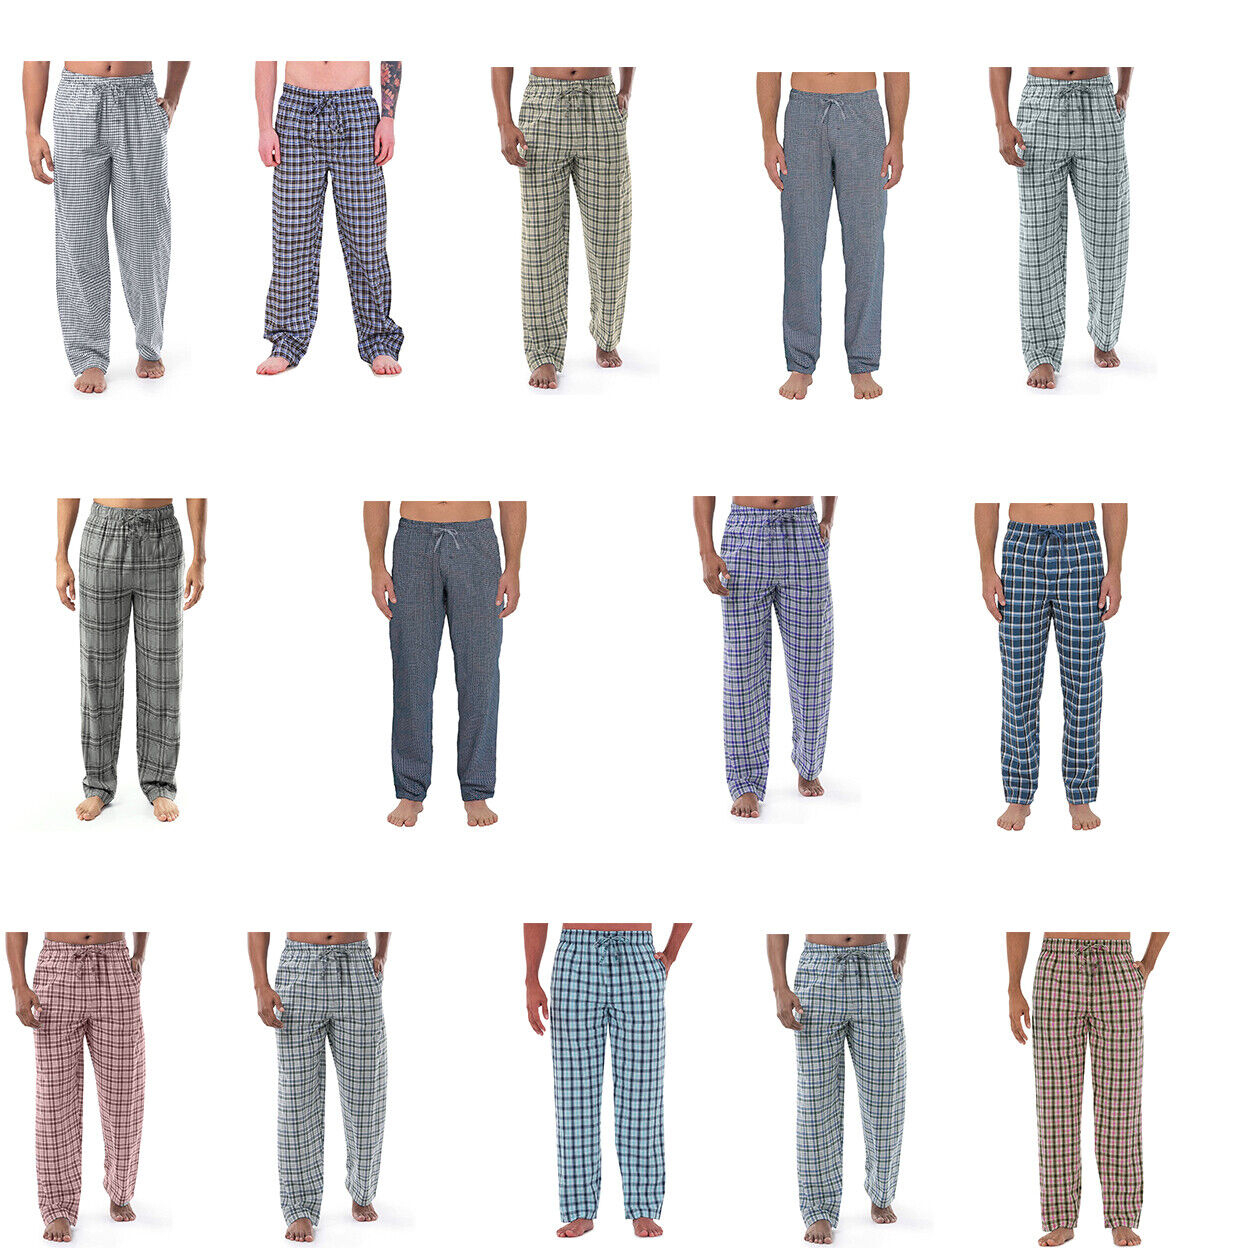 Men's Ultra-Soft Plaid Cotton Jersey Knit Comfy Sleep Lounge Pajama Pants - Blue, Medium